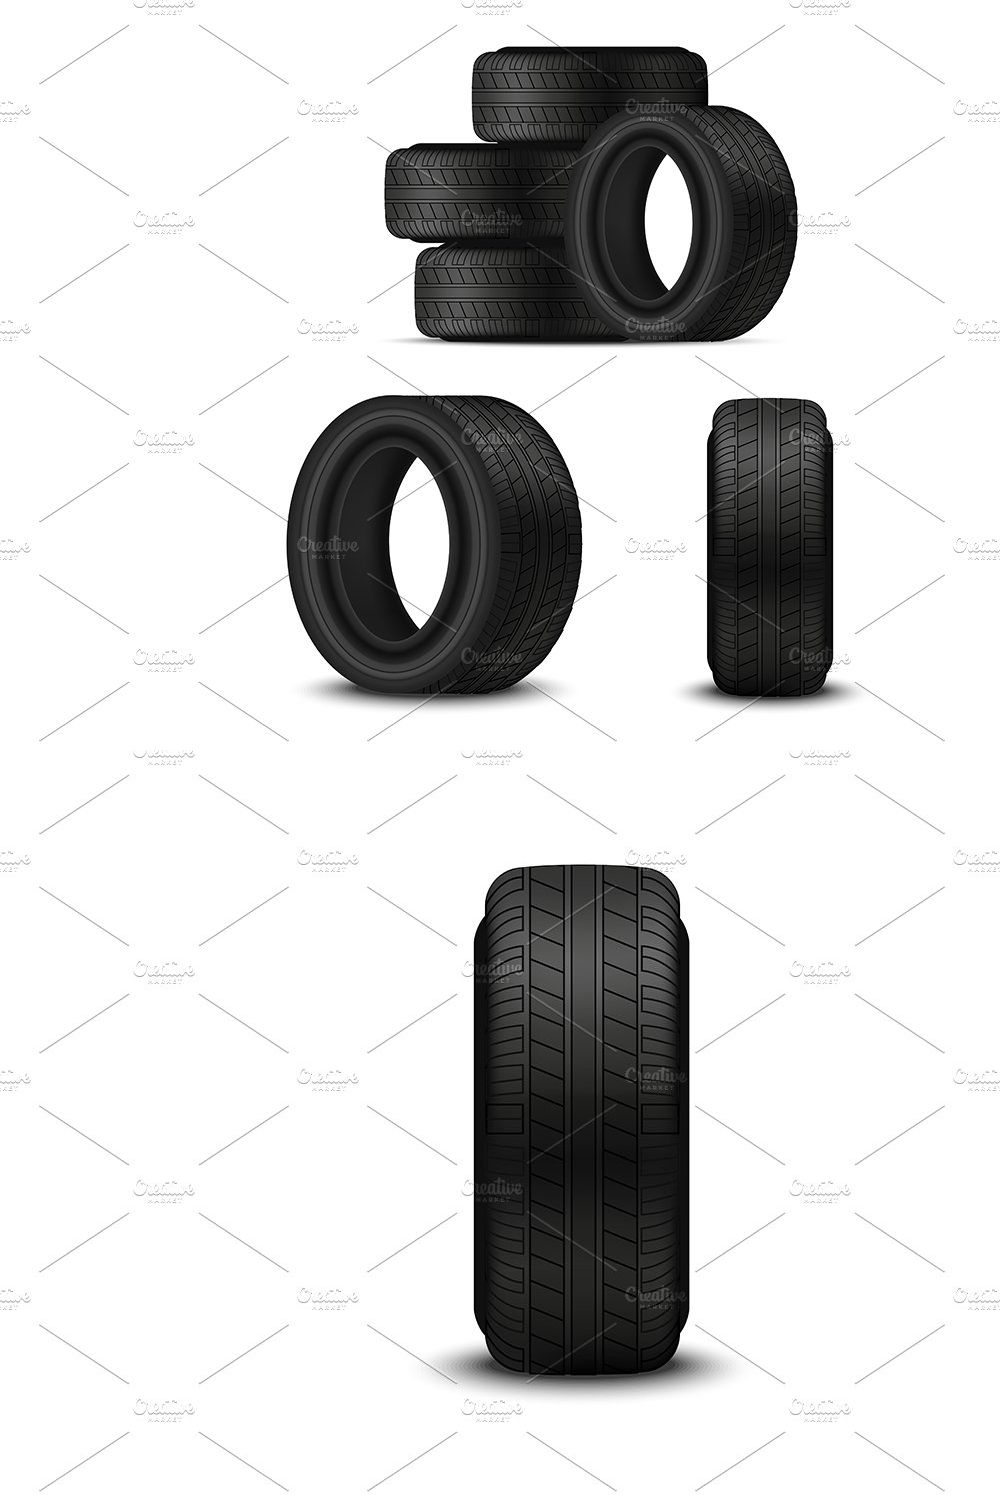 Realistic 3d Detailed Car Tires Set. pinterest preview image.